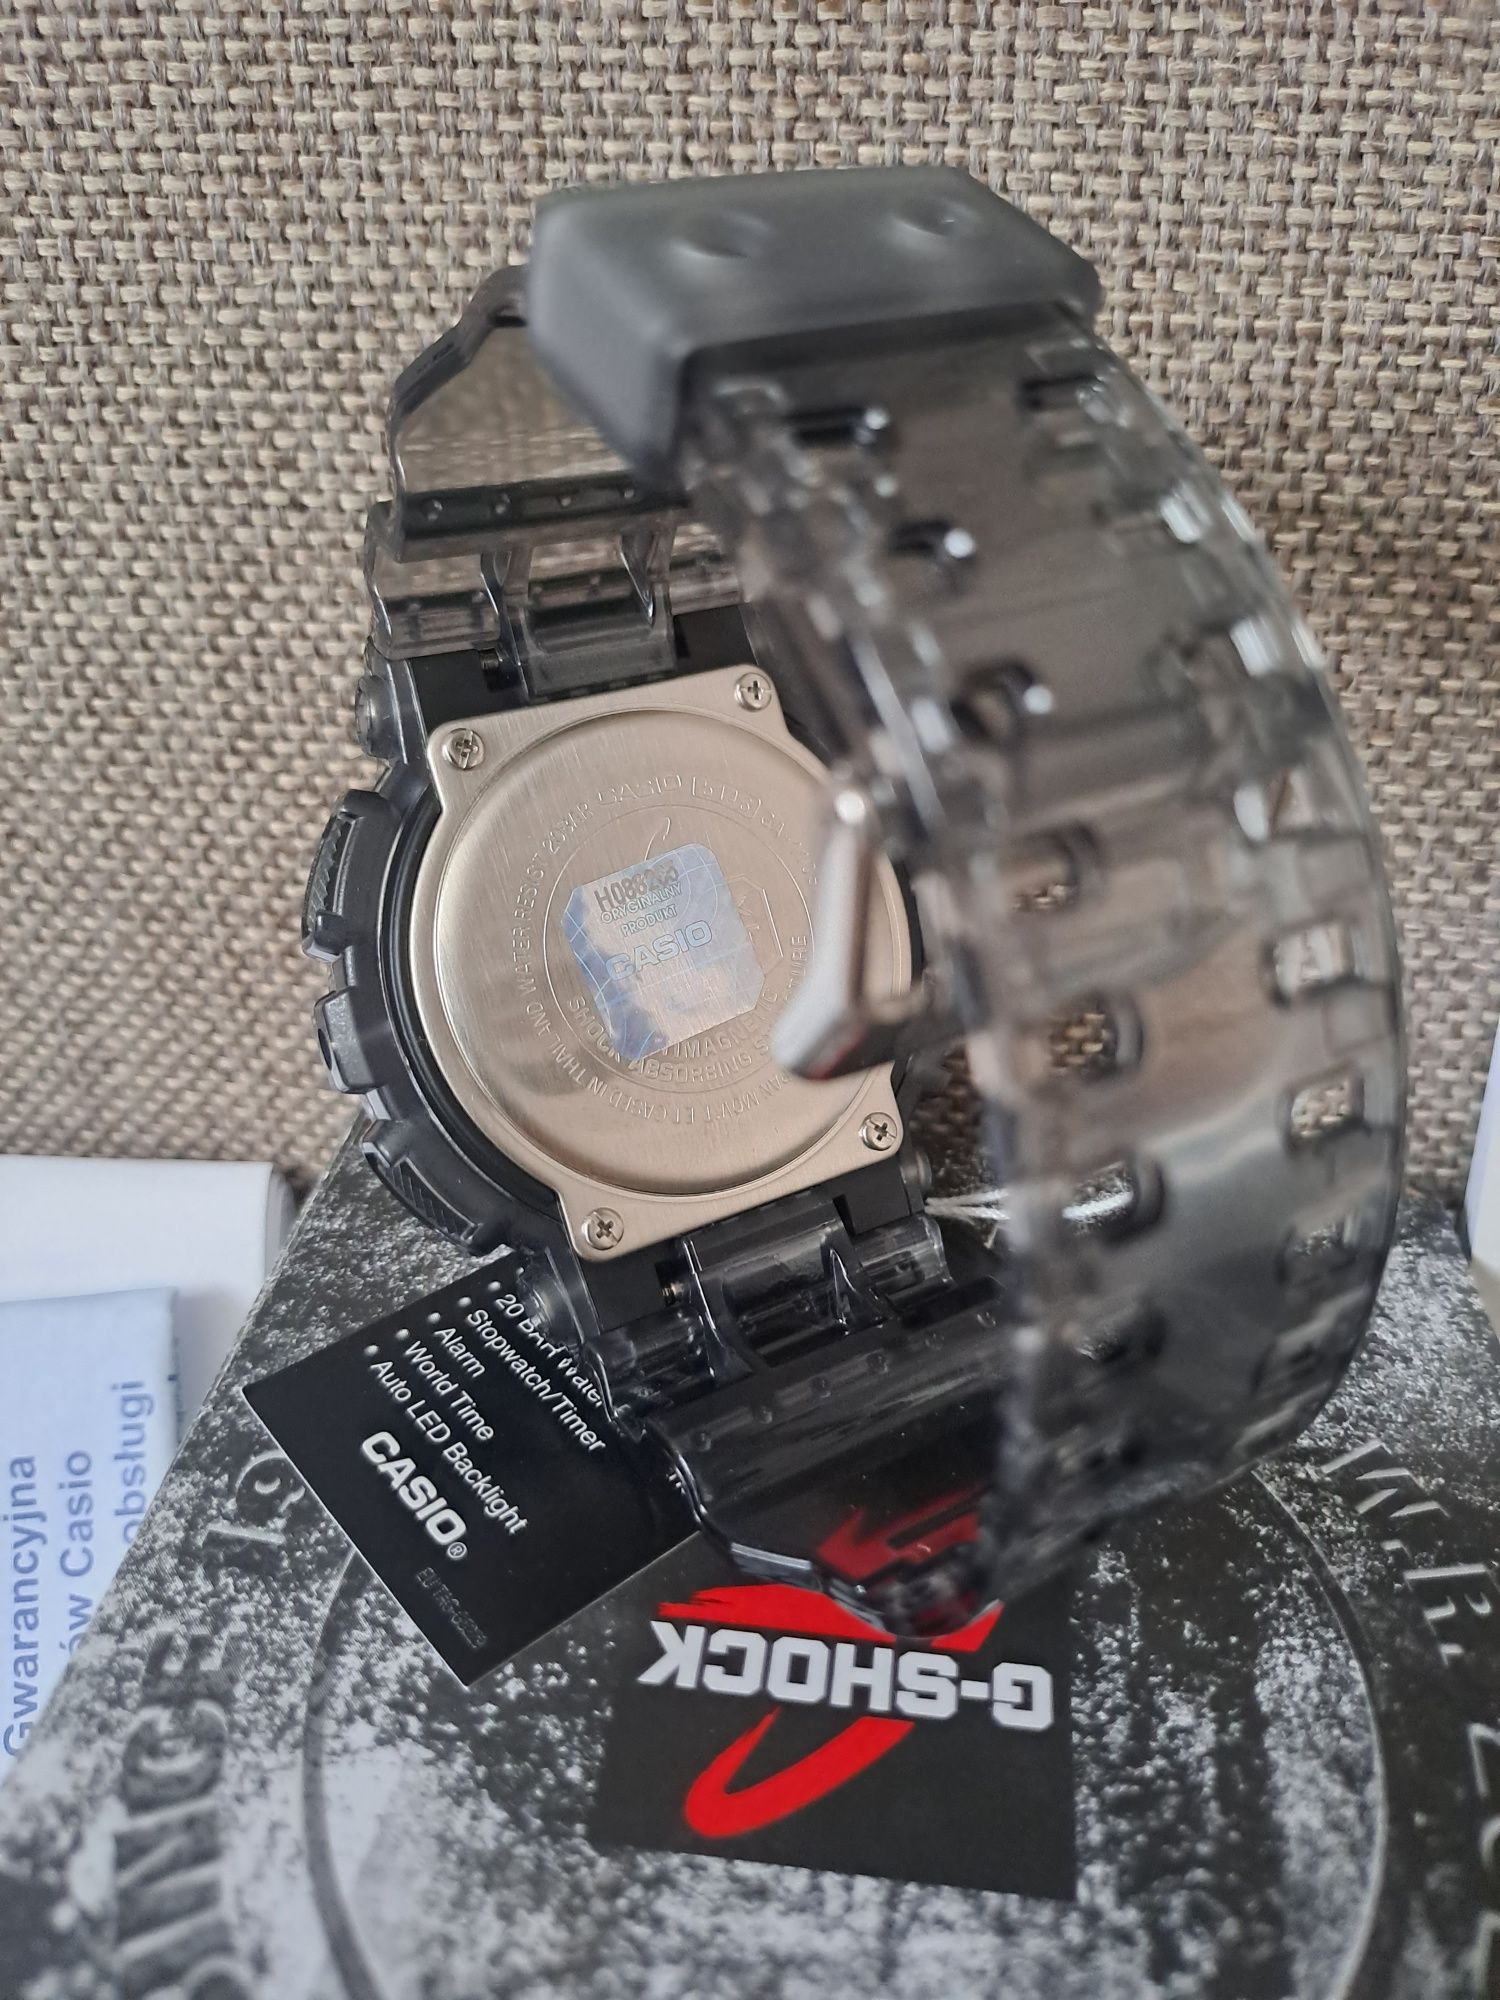 Casio zegarek męski GA-110SKE-8AER nowy na prezent